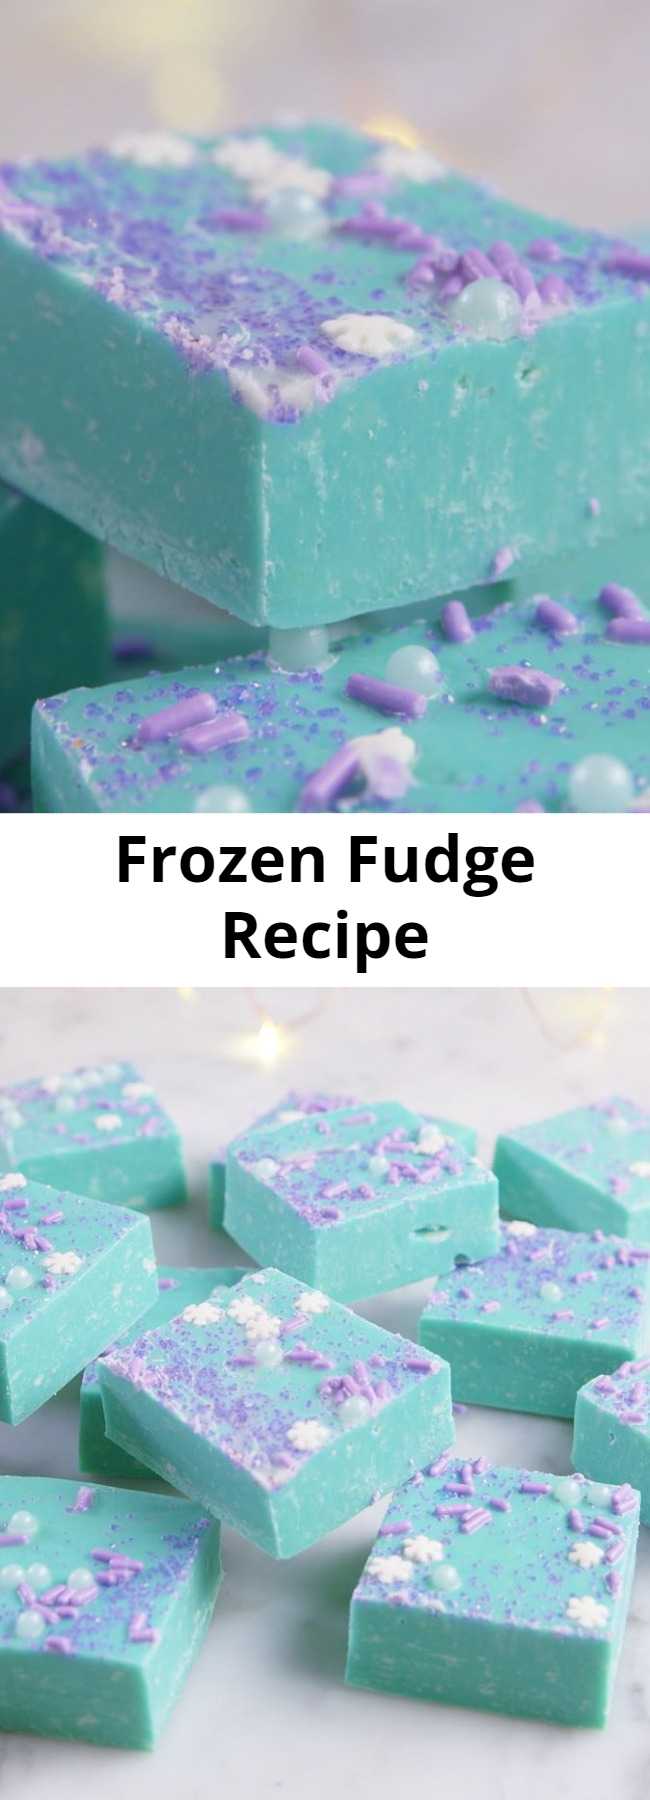 Frozen Fudge Recipe - Even Elsa couldn't resist this fudge. #kids #dessert #frozen #fudge #baking